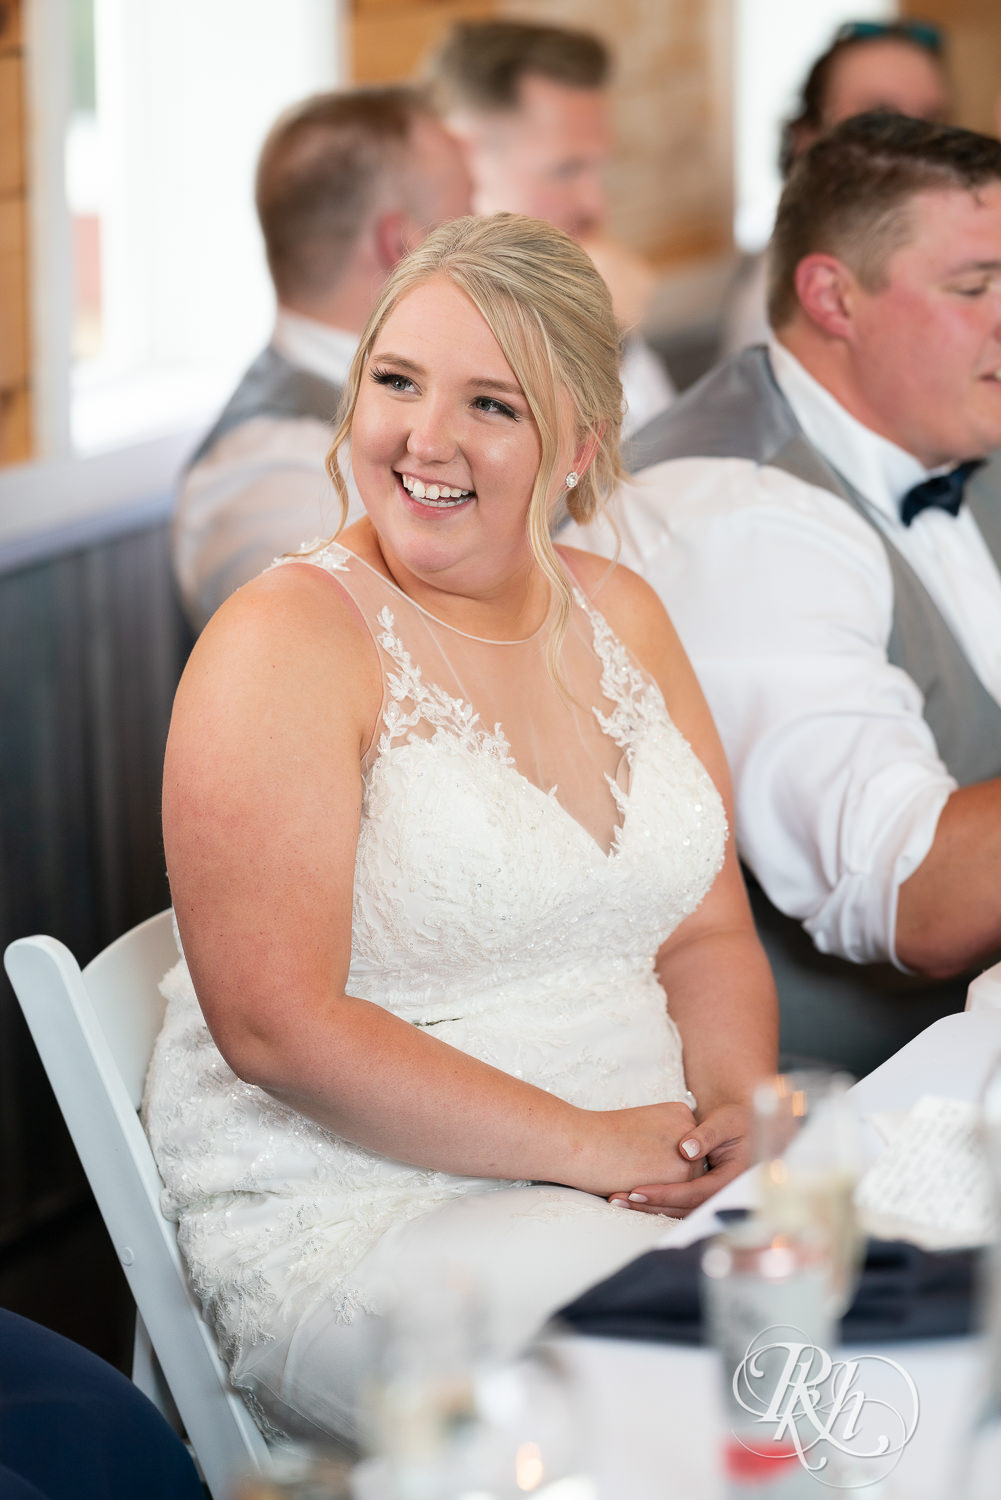 Bride laughing during reception at Barn at Mirror Lake in Mondovi, Wisconsin.